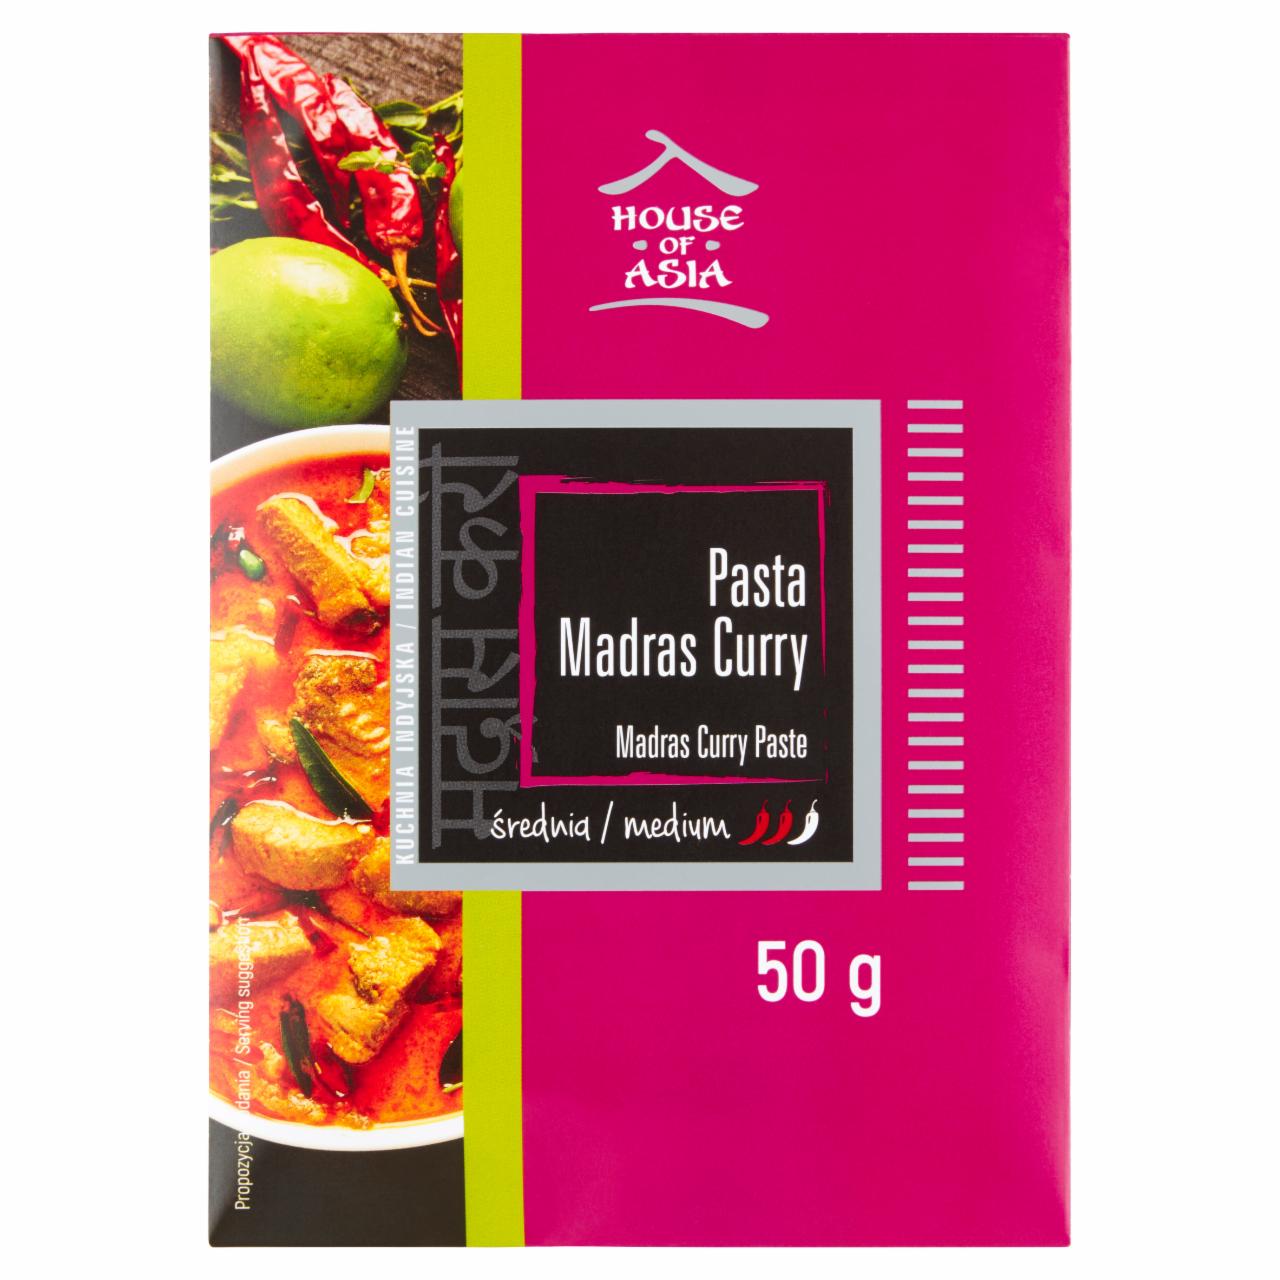 Zdjęcia - House of Asia Pasta Madras Curry średnia 50 g